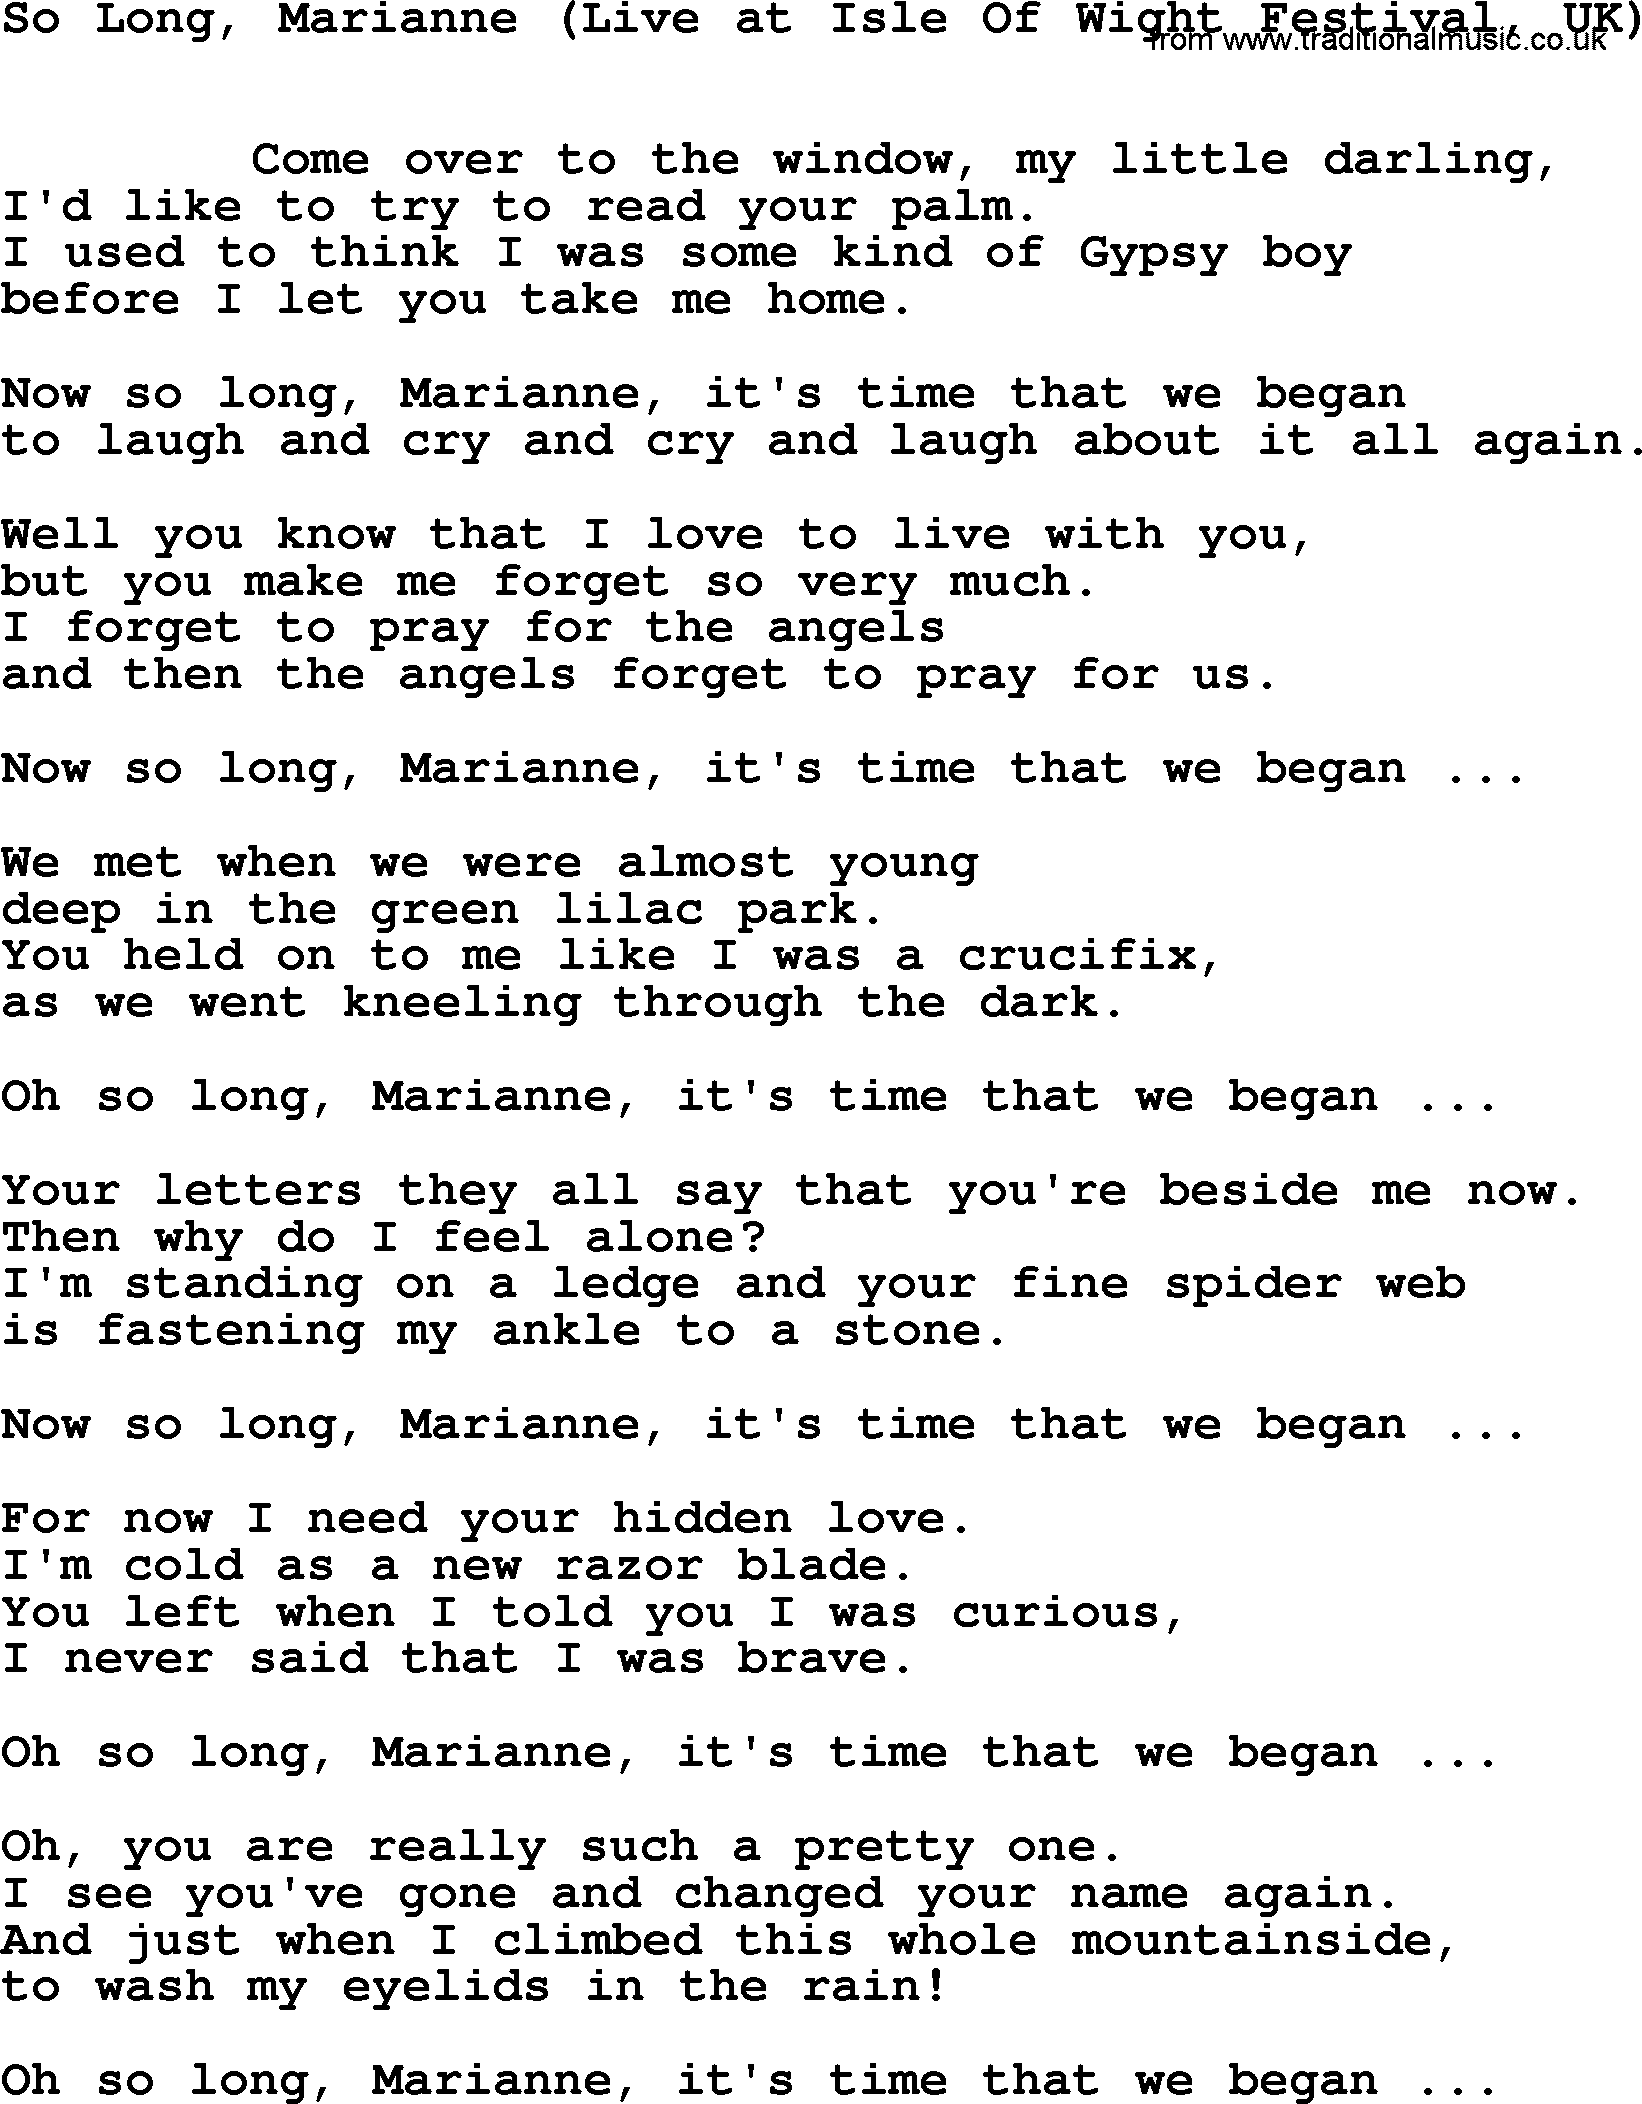 Leonard Cohen song So Long Marianne(Isle Wight Festiva)-leonard-cohen.txt lyrics